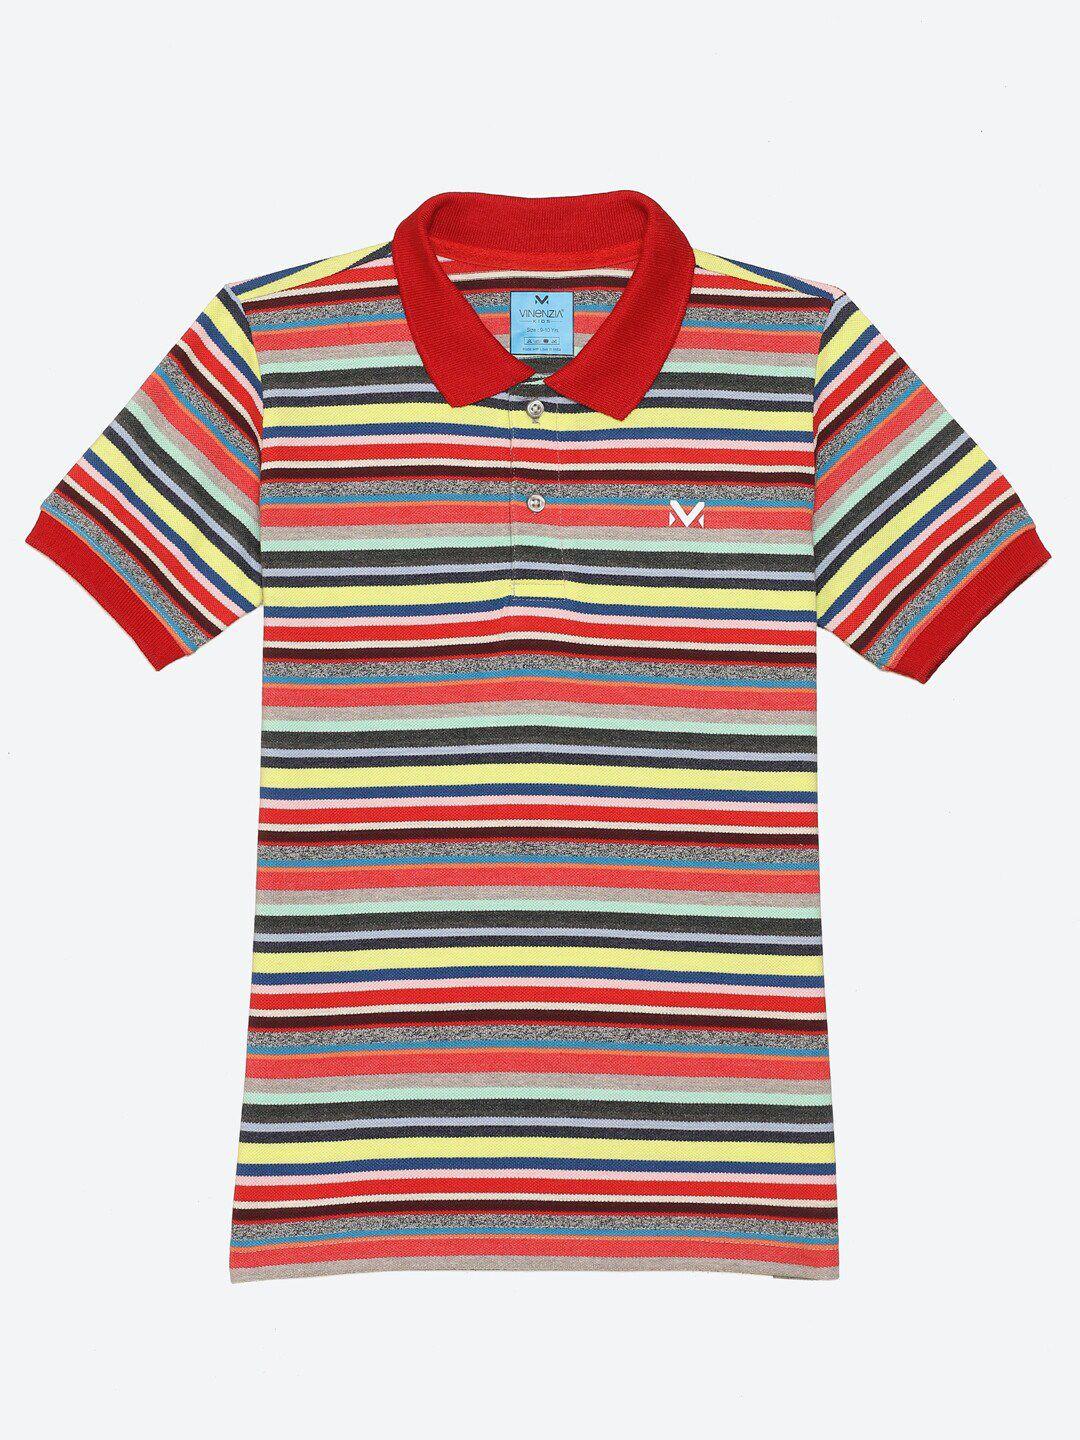 vinenzia boys red & yellow striped polo collar t-shirt